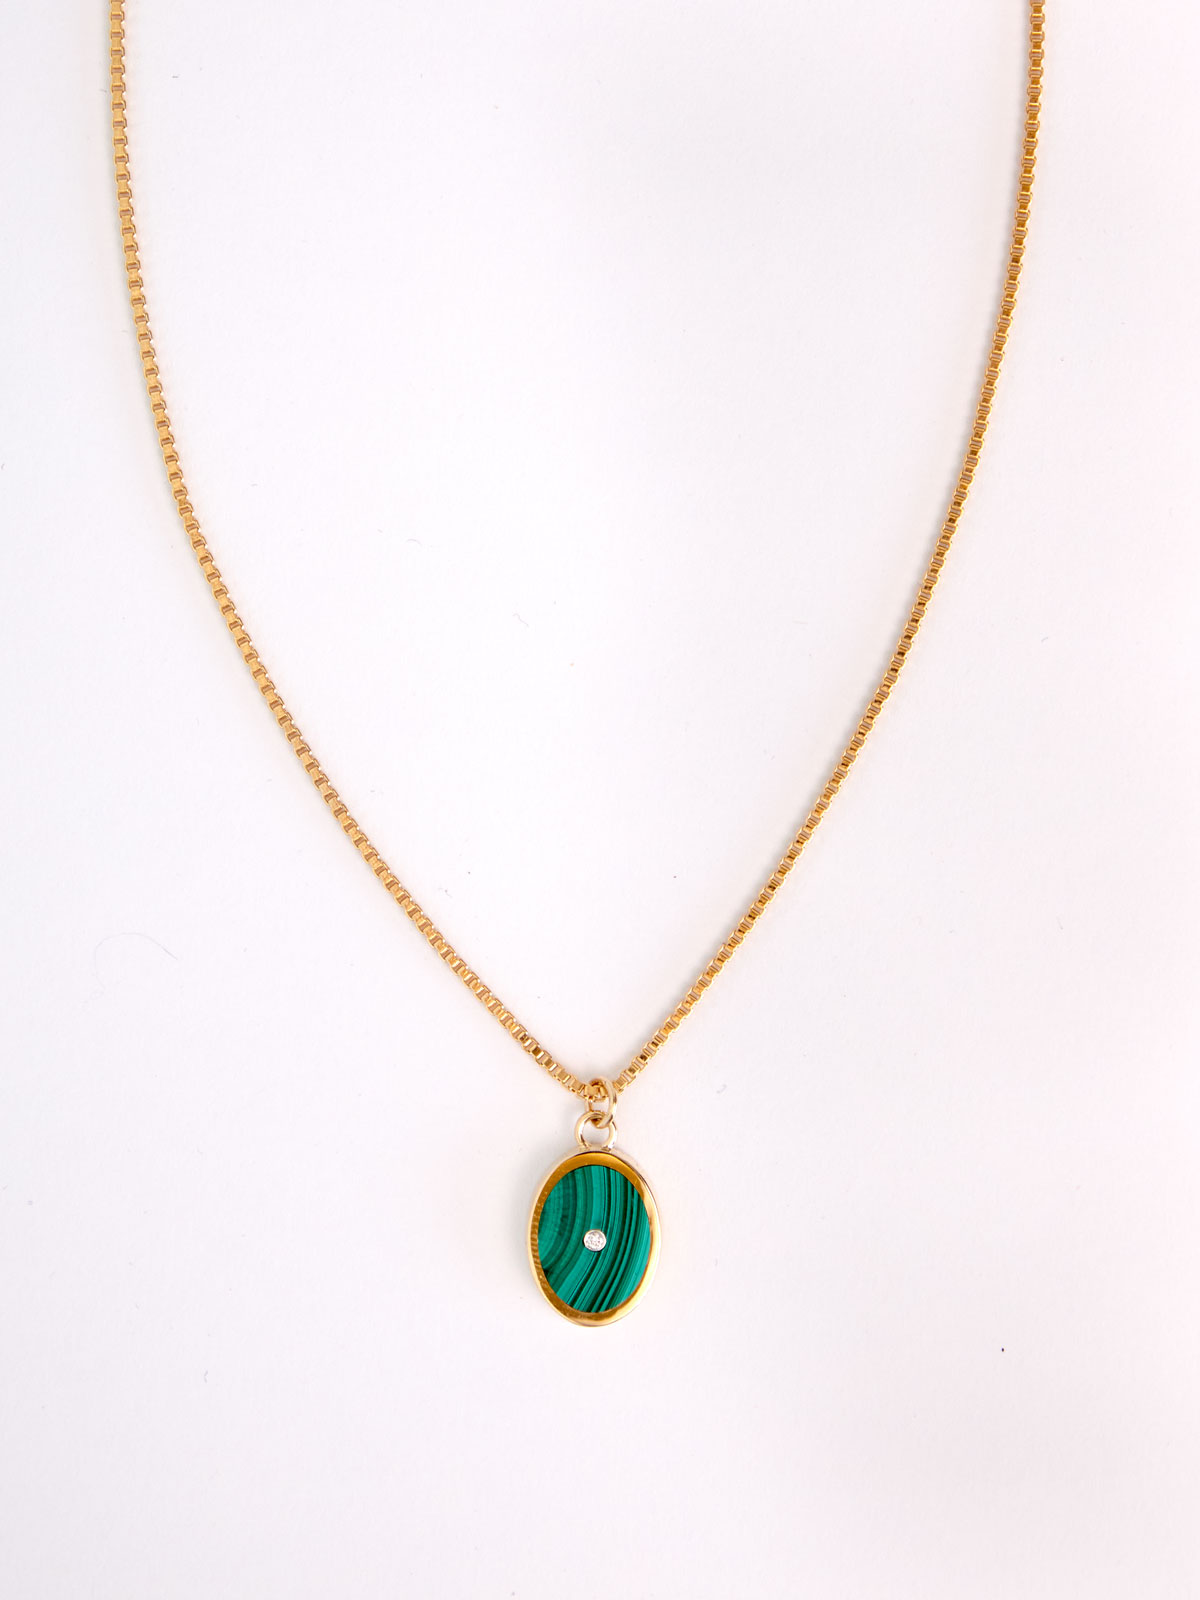 14K Malachite Oval Pendant Necklace w/Diamond by Legier